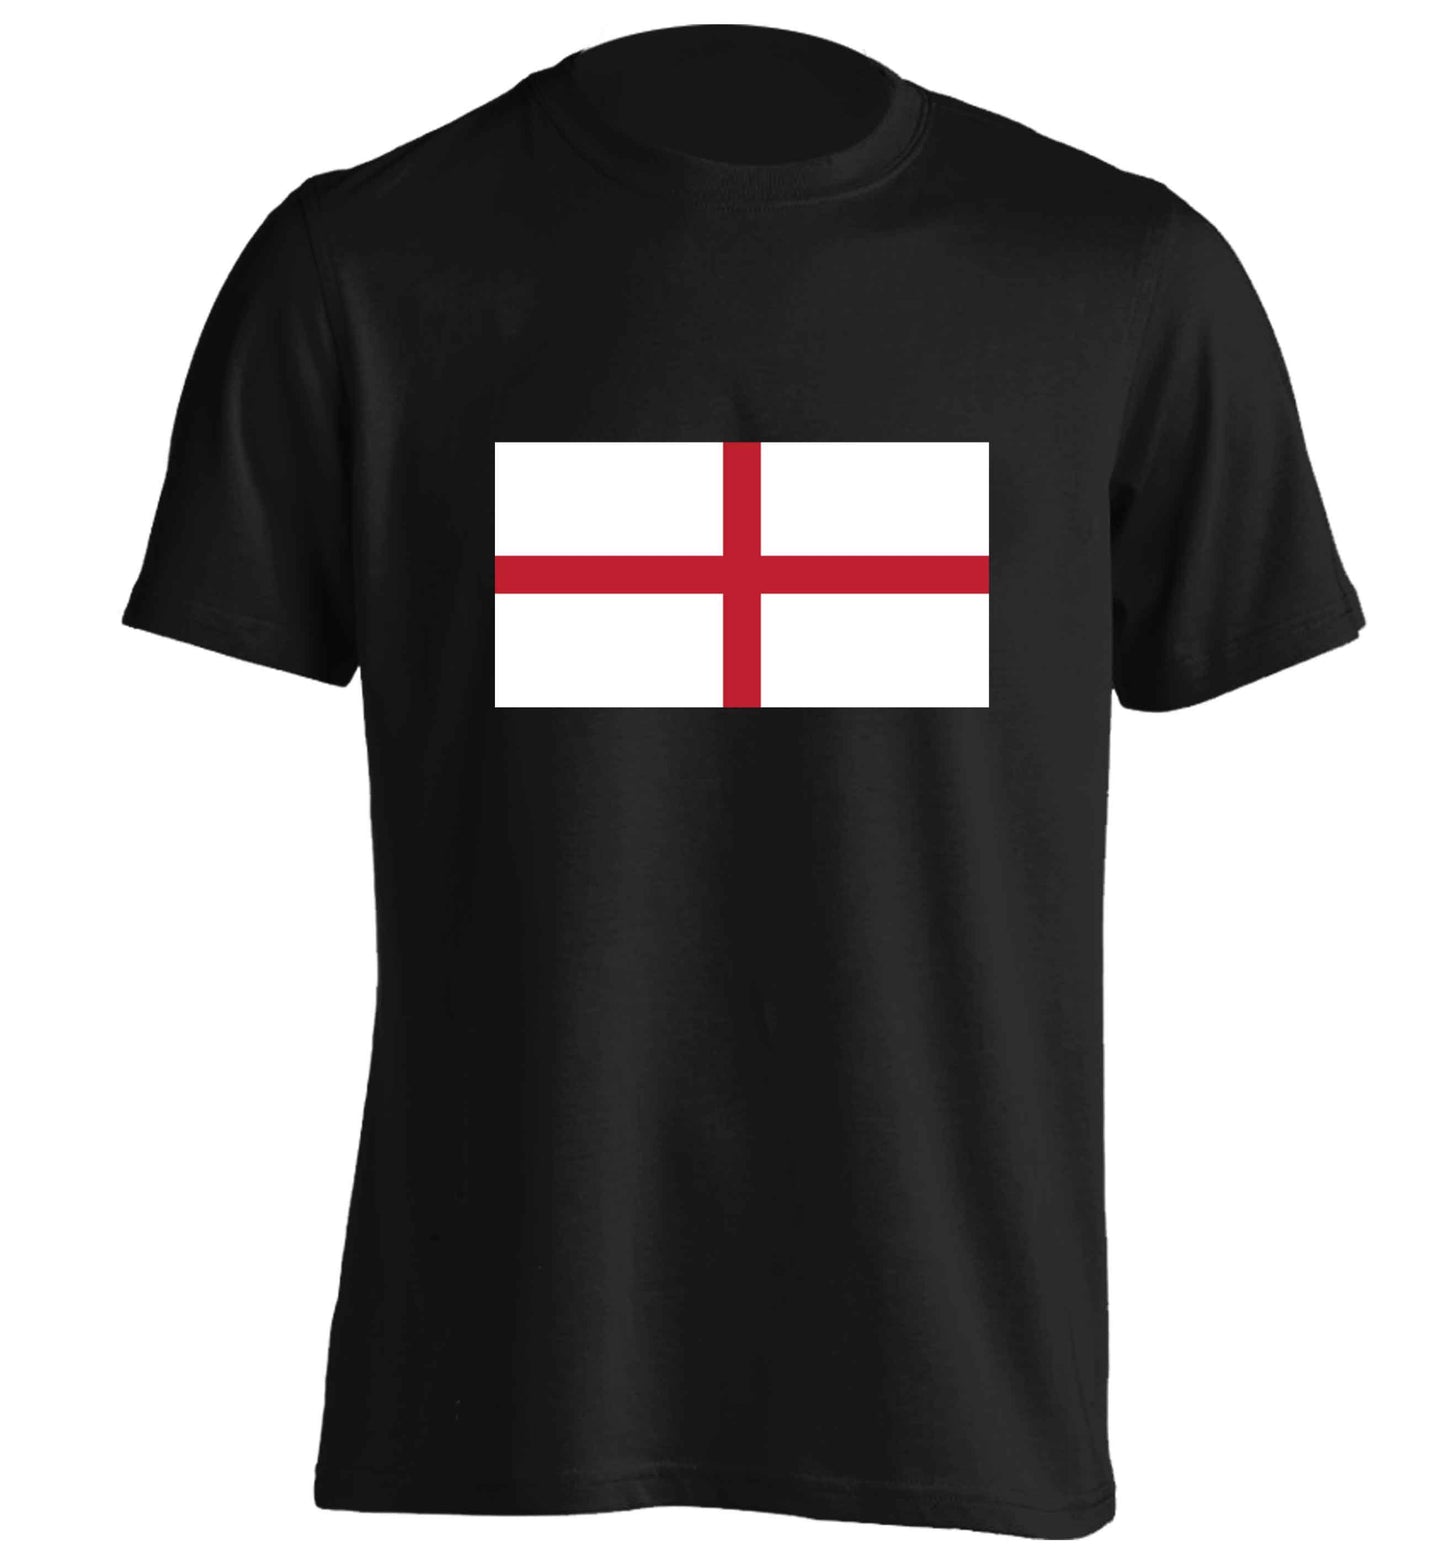 England Flag adults unisex black Tshirt 2XL